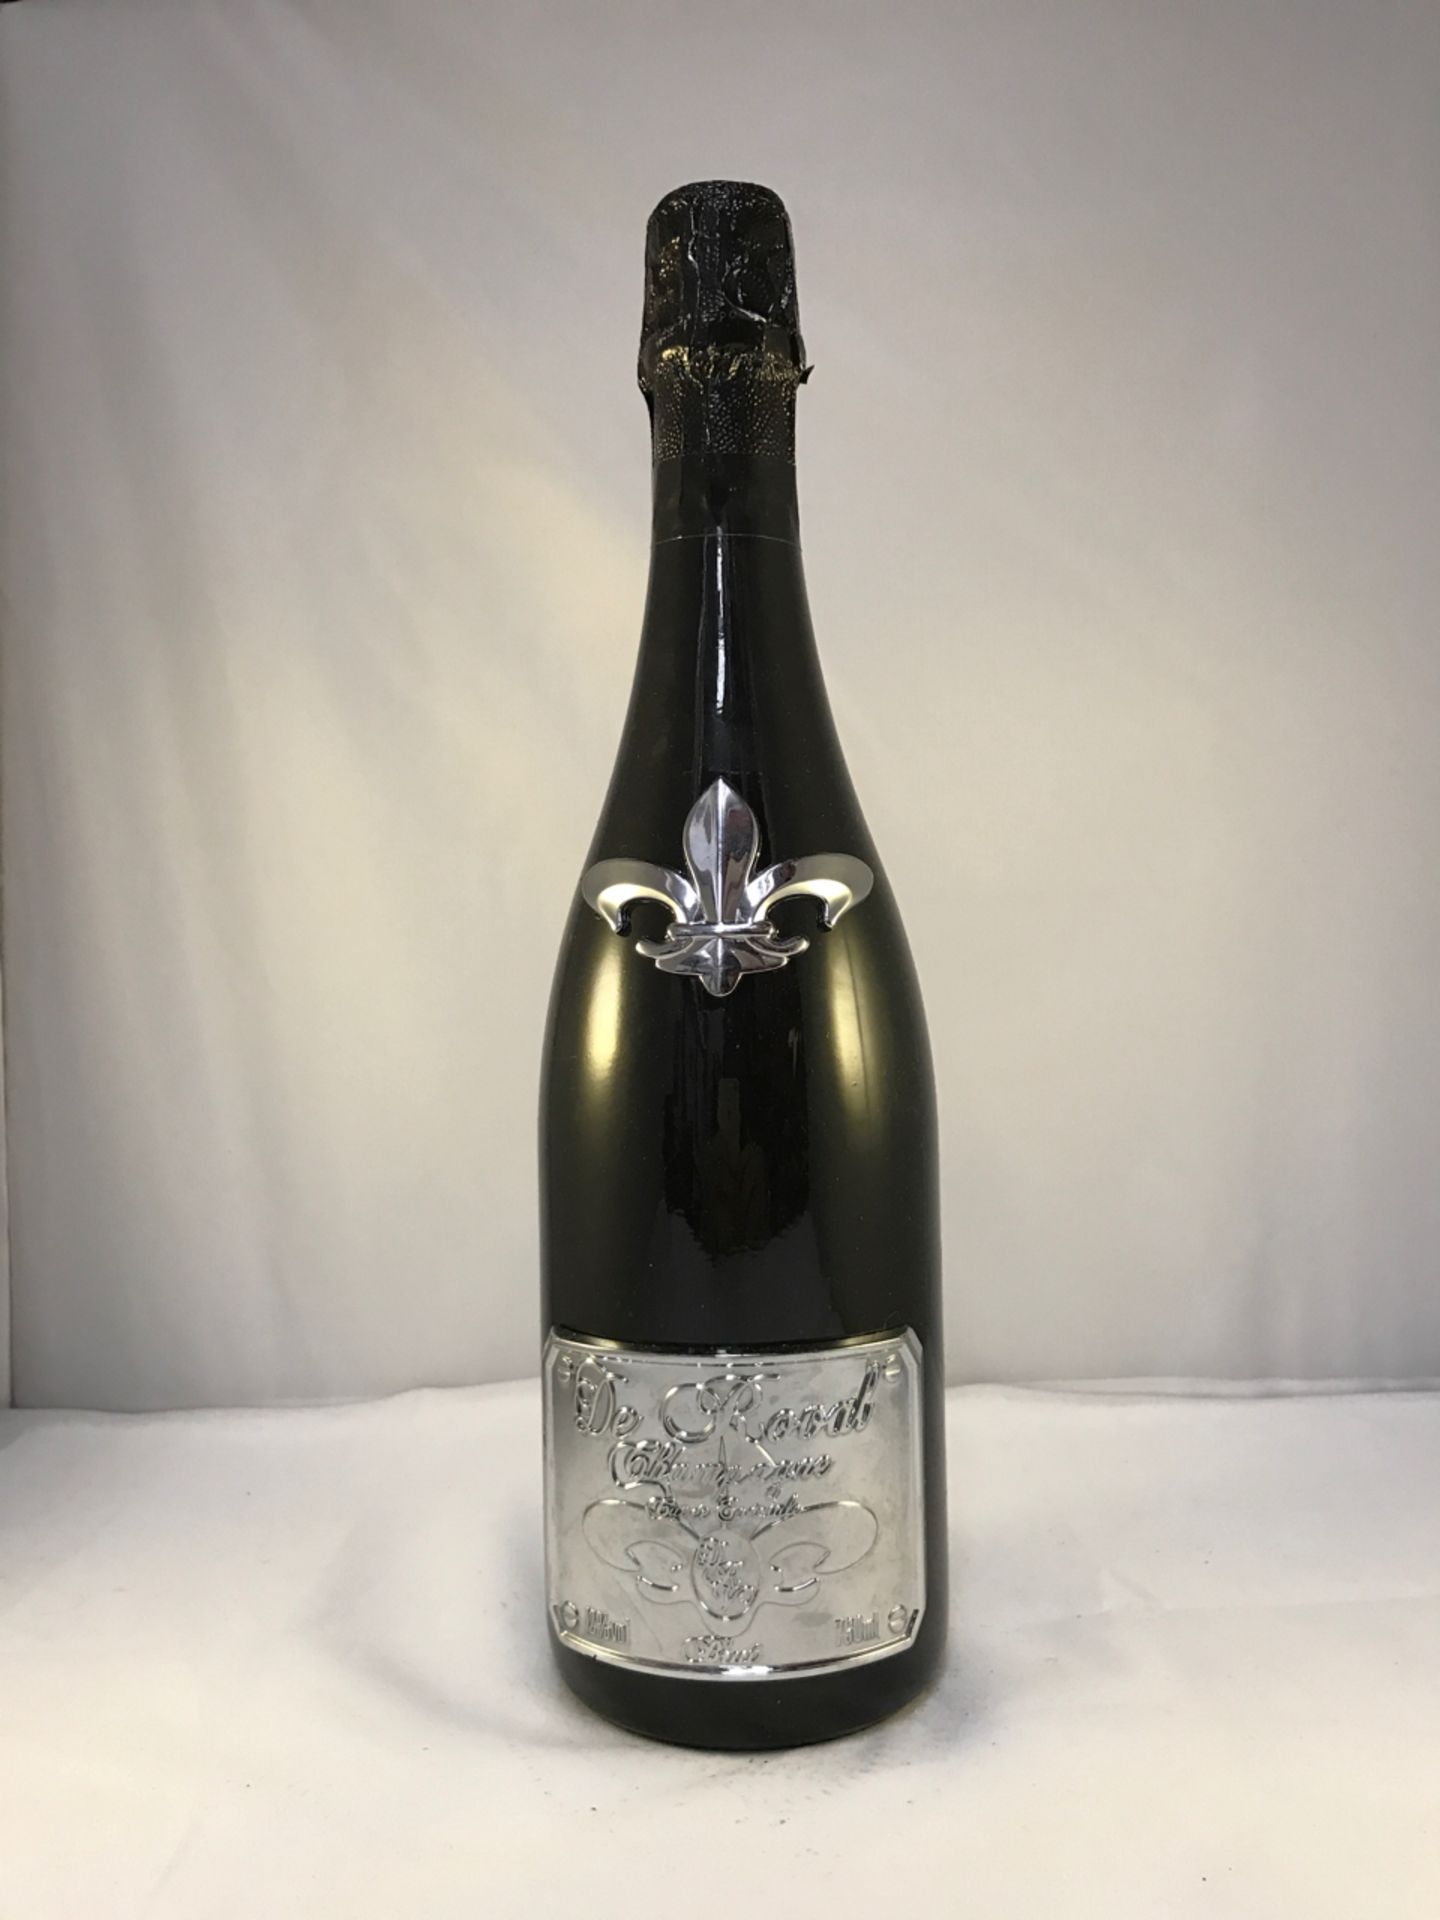 1 bottle of De Roval Platinum Champagne 2015